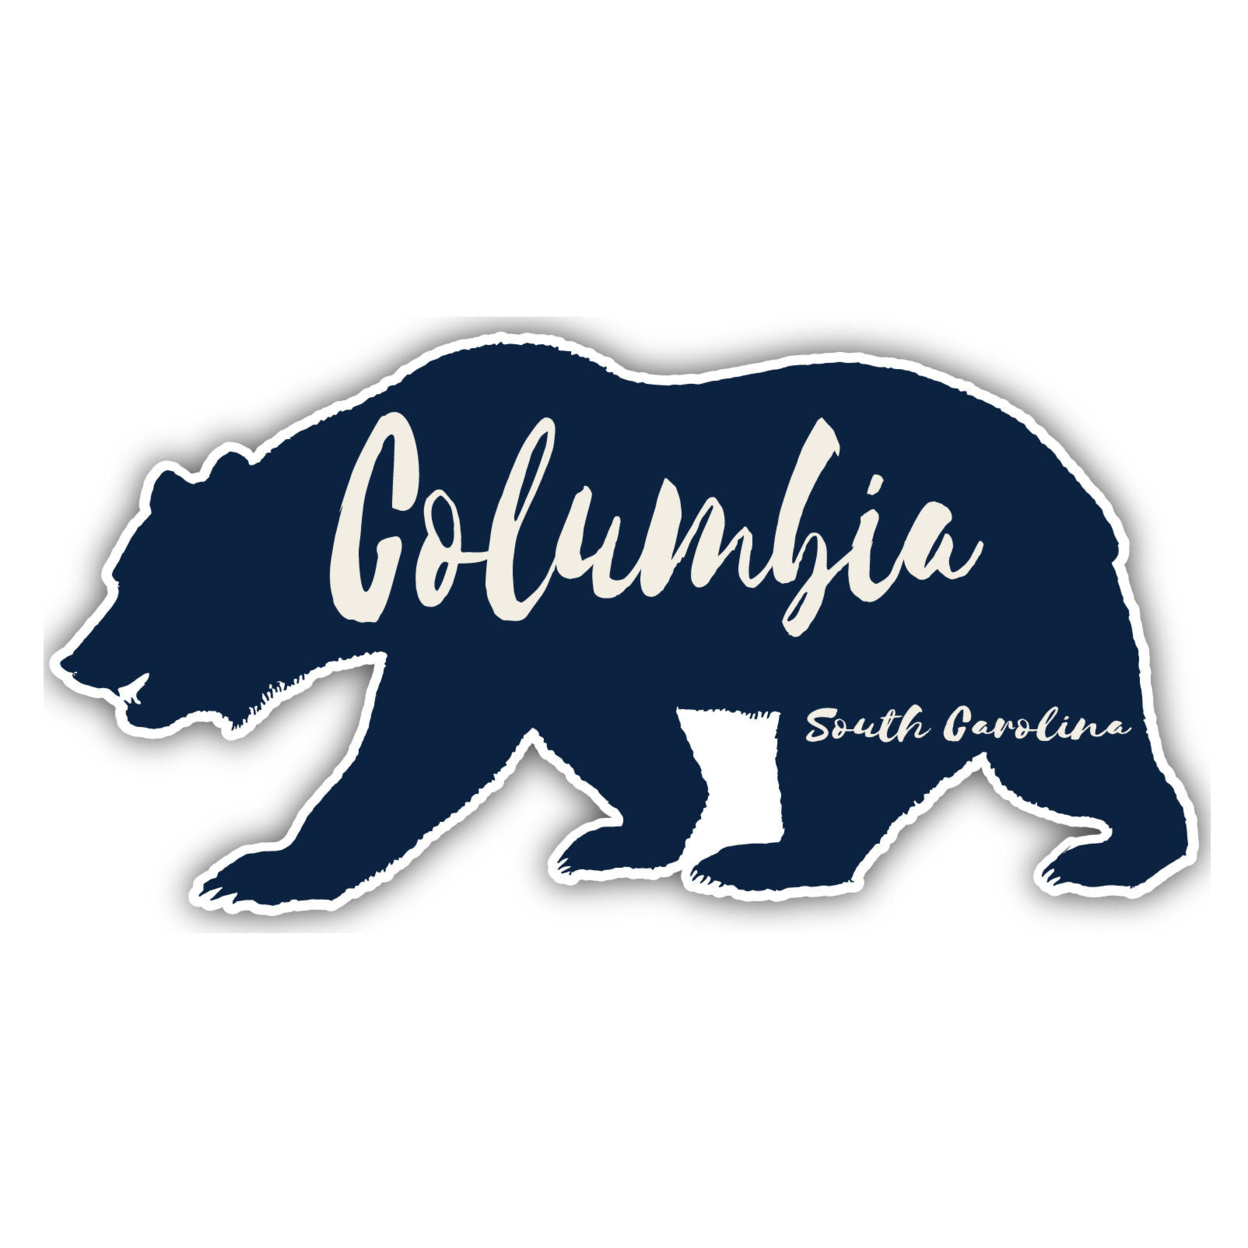 Columbia South Carolina Souvenir Decorative Stickers (Choose Theme And Size) - Single Unit, 4-Inch, Bear